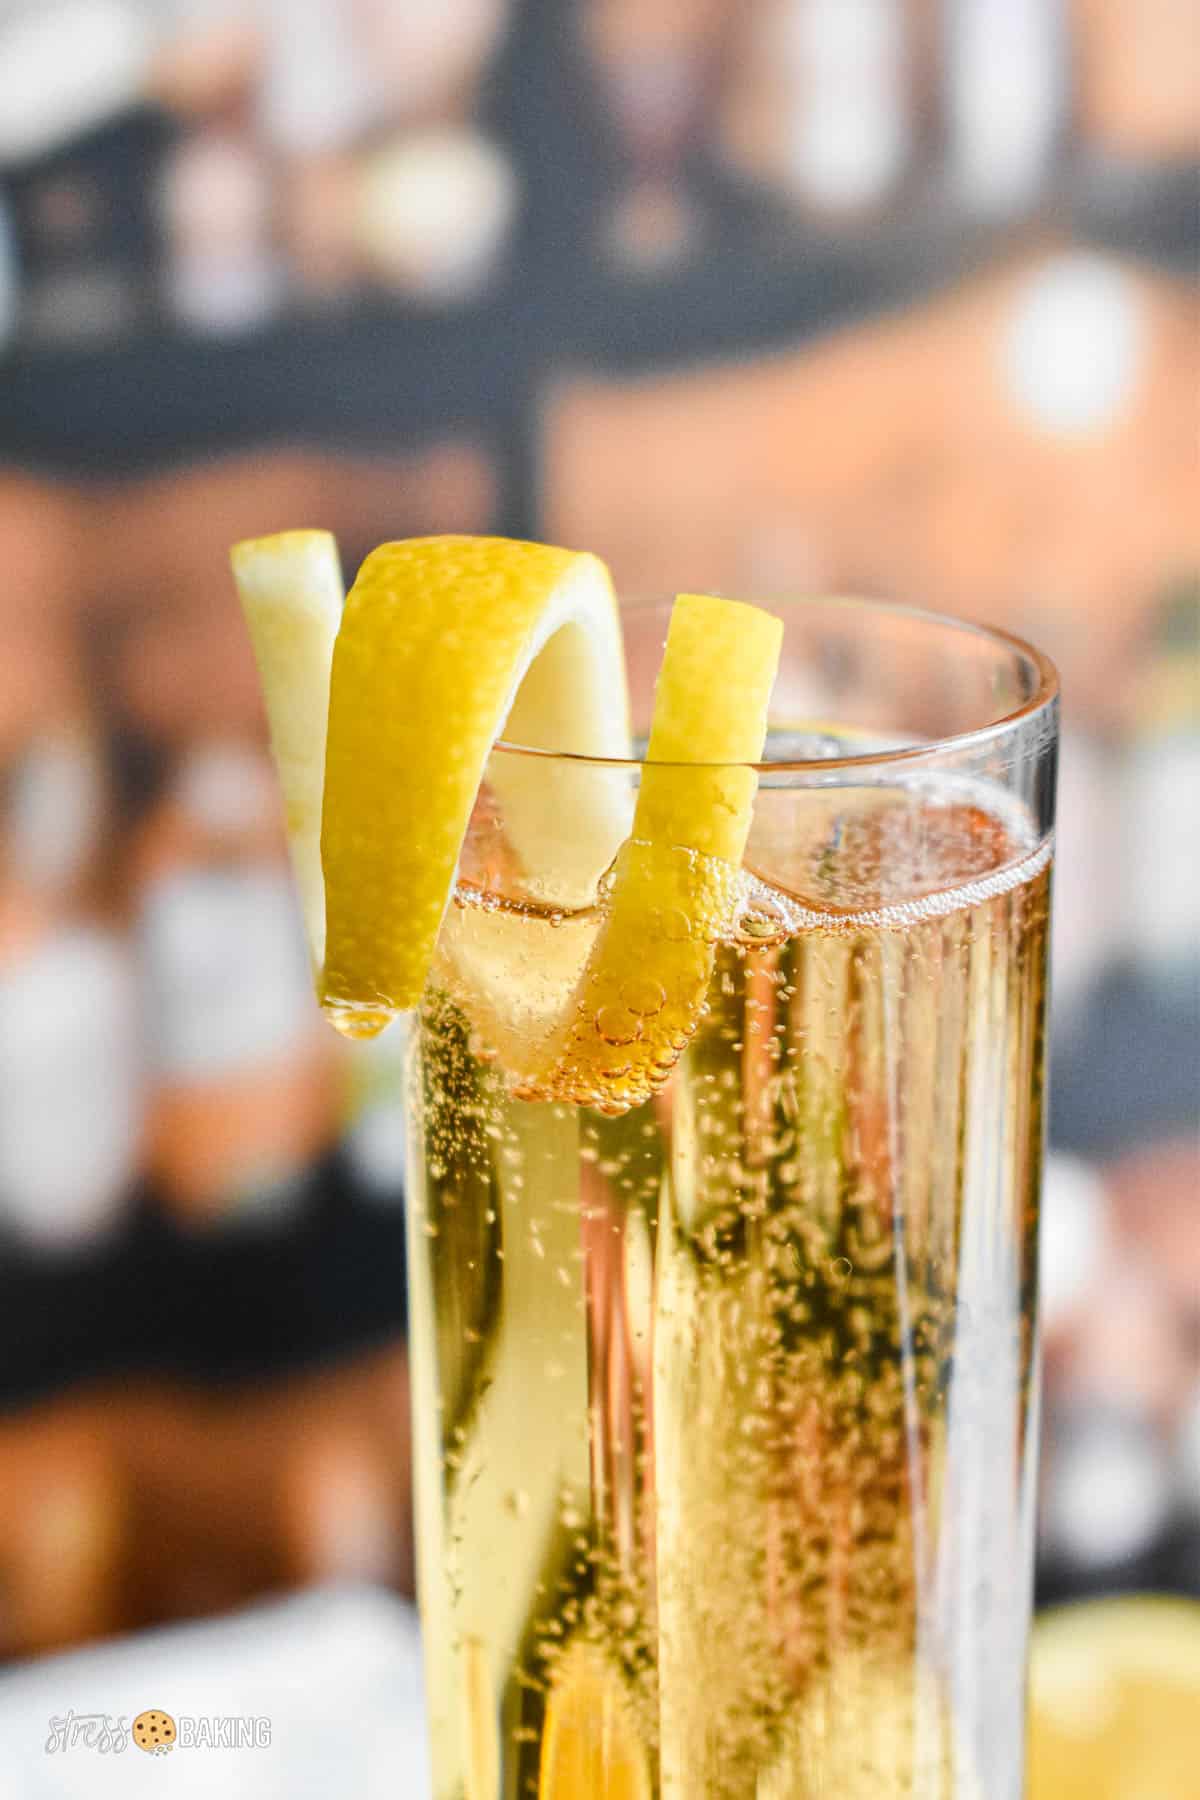 A lemon twist garnish on the edge of a champagne flute